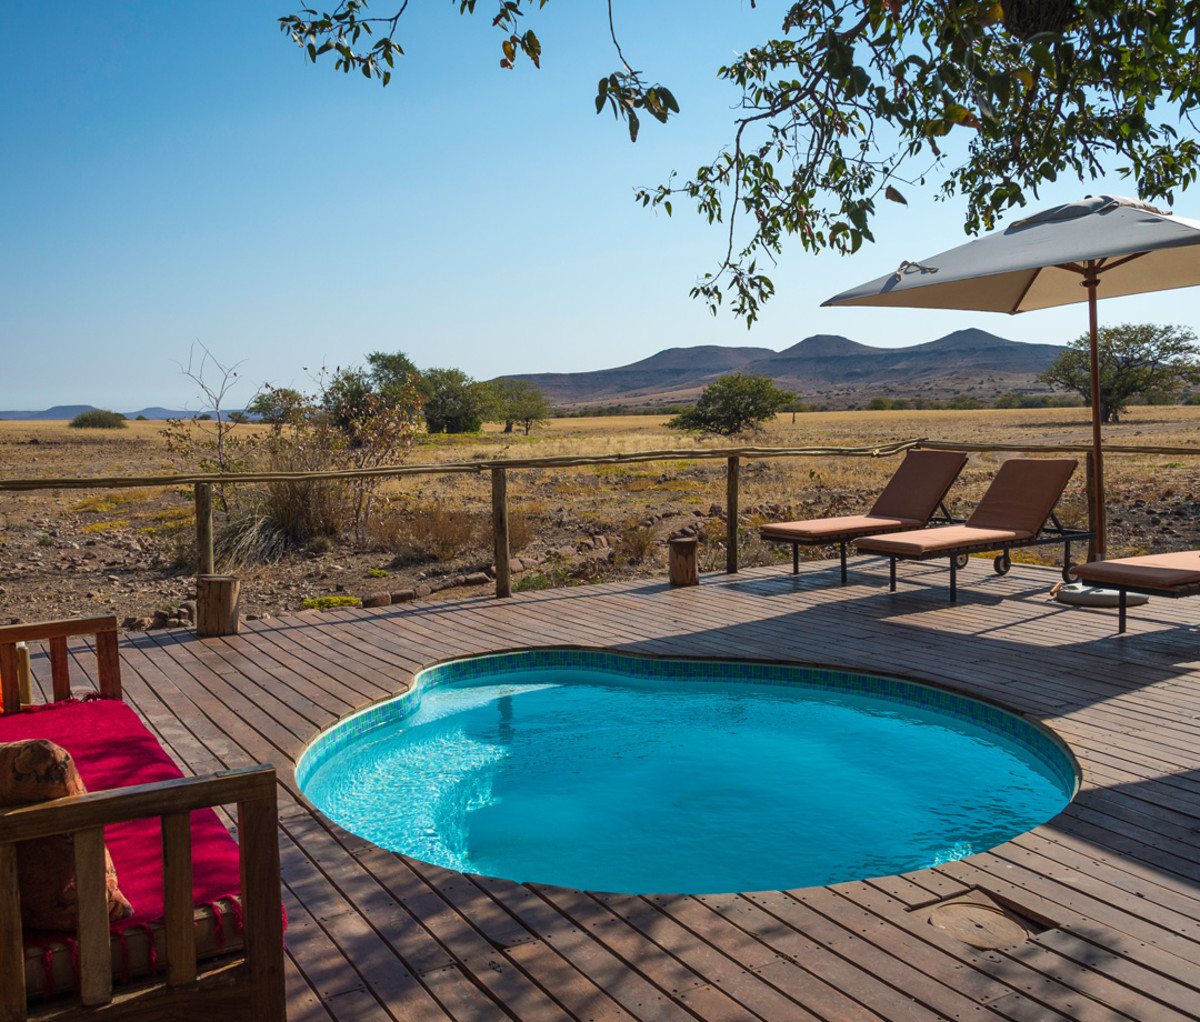 Pool at Desert Rhino Camp in Damaraland, Namibia